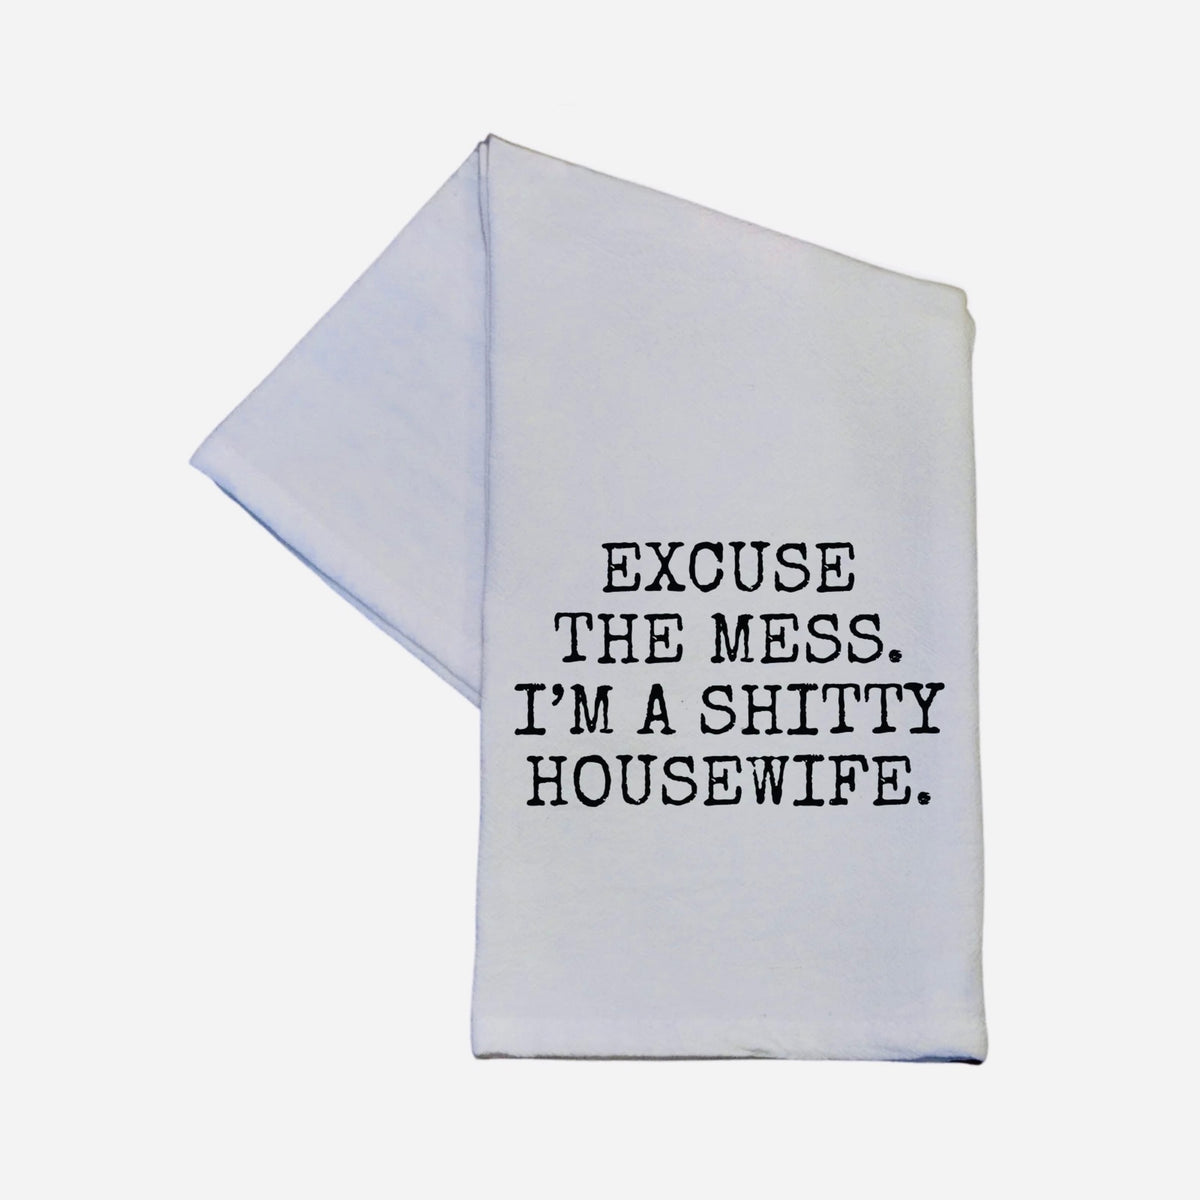 EXCUSE THE MESS, I'M A SHITTY HOUSEWIFE TEA TOWEL - WHITE